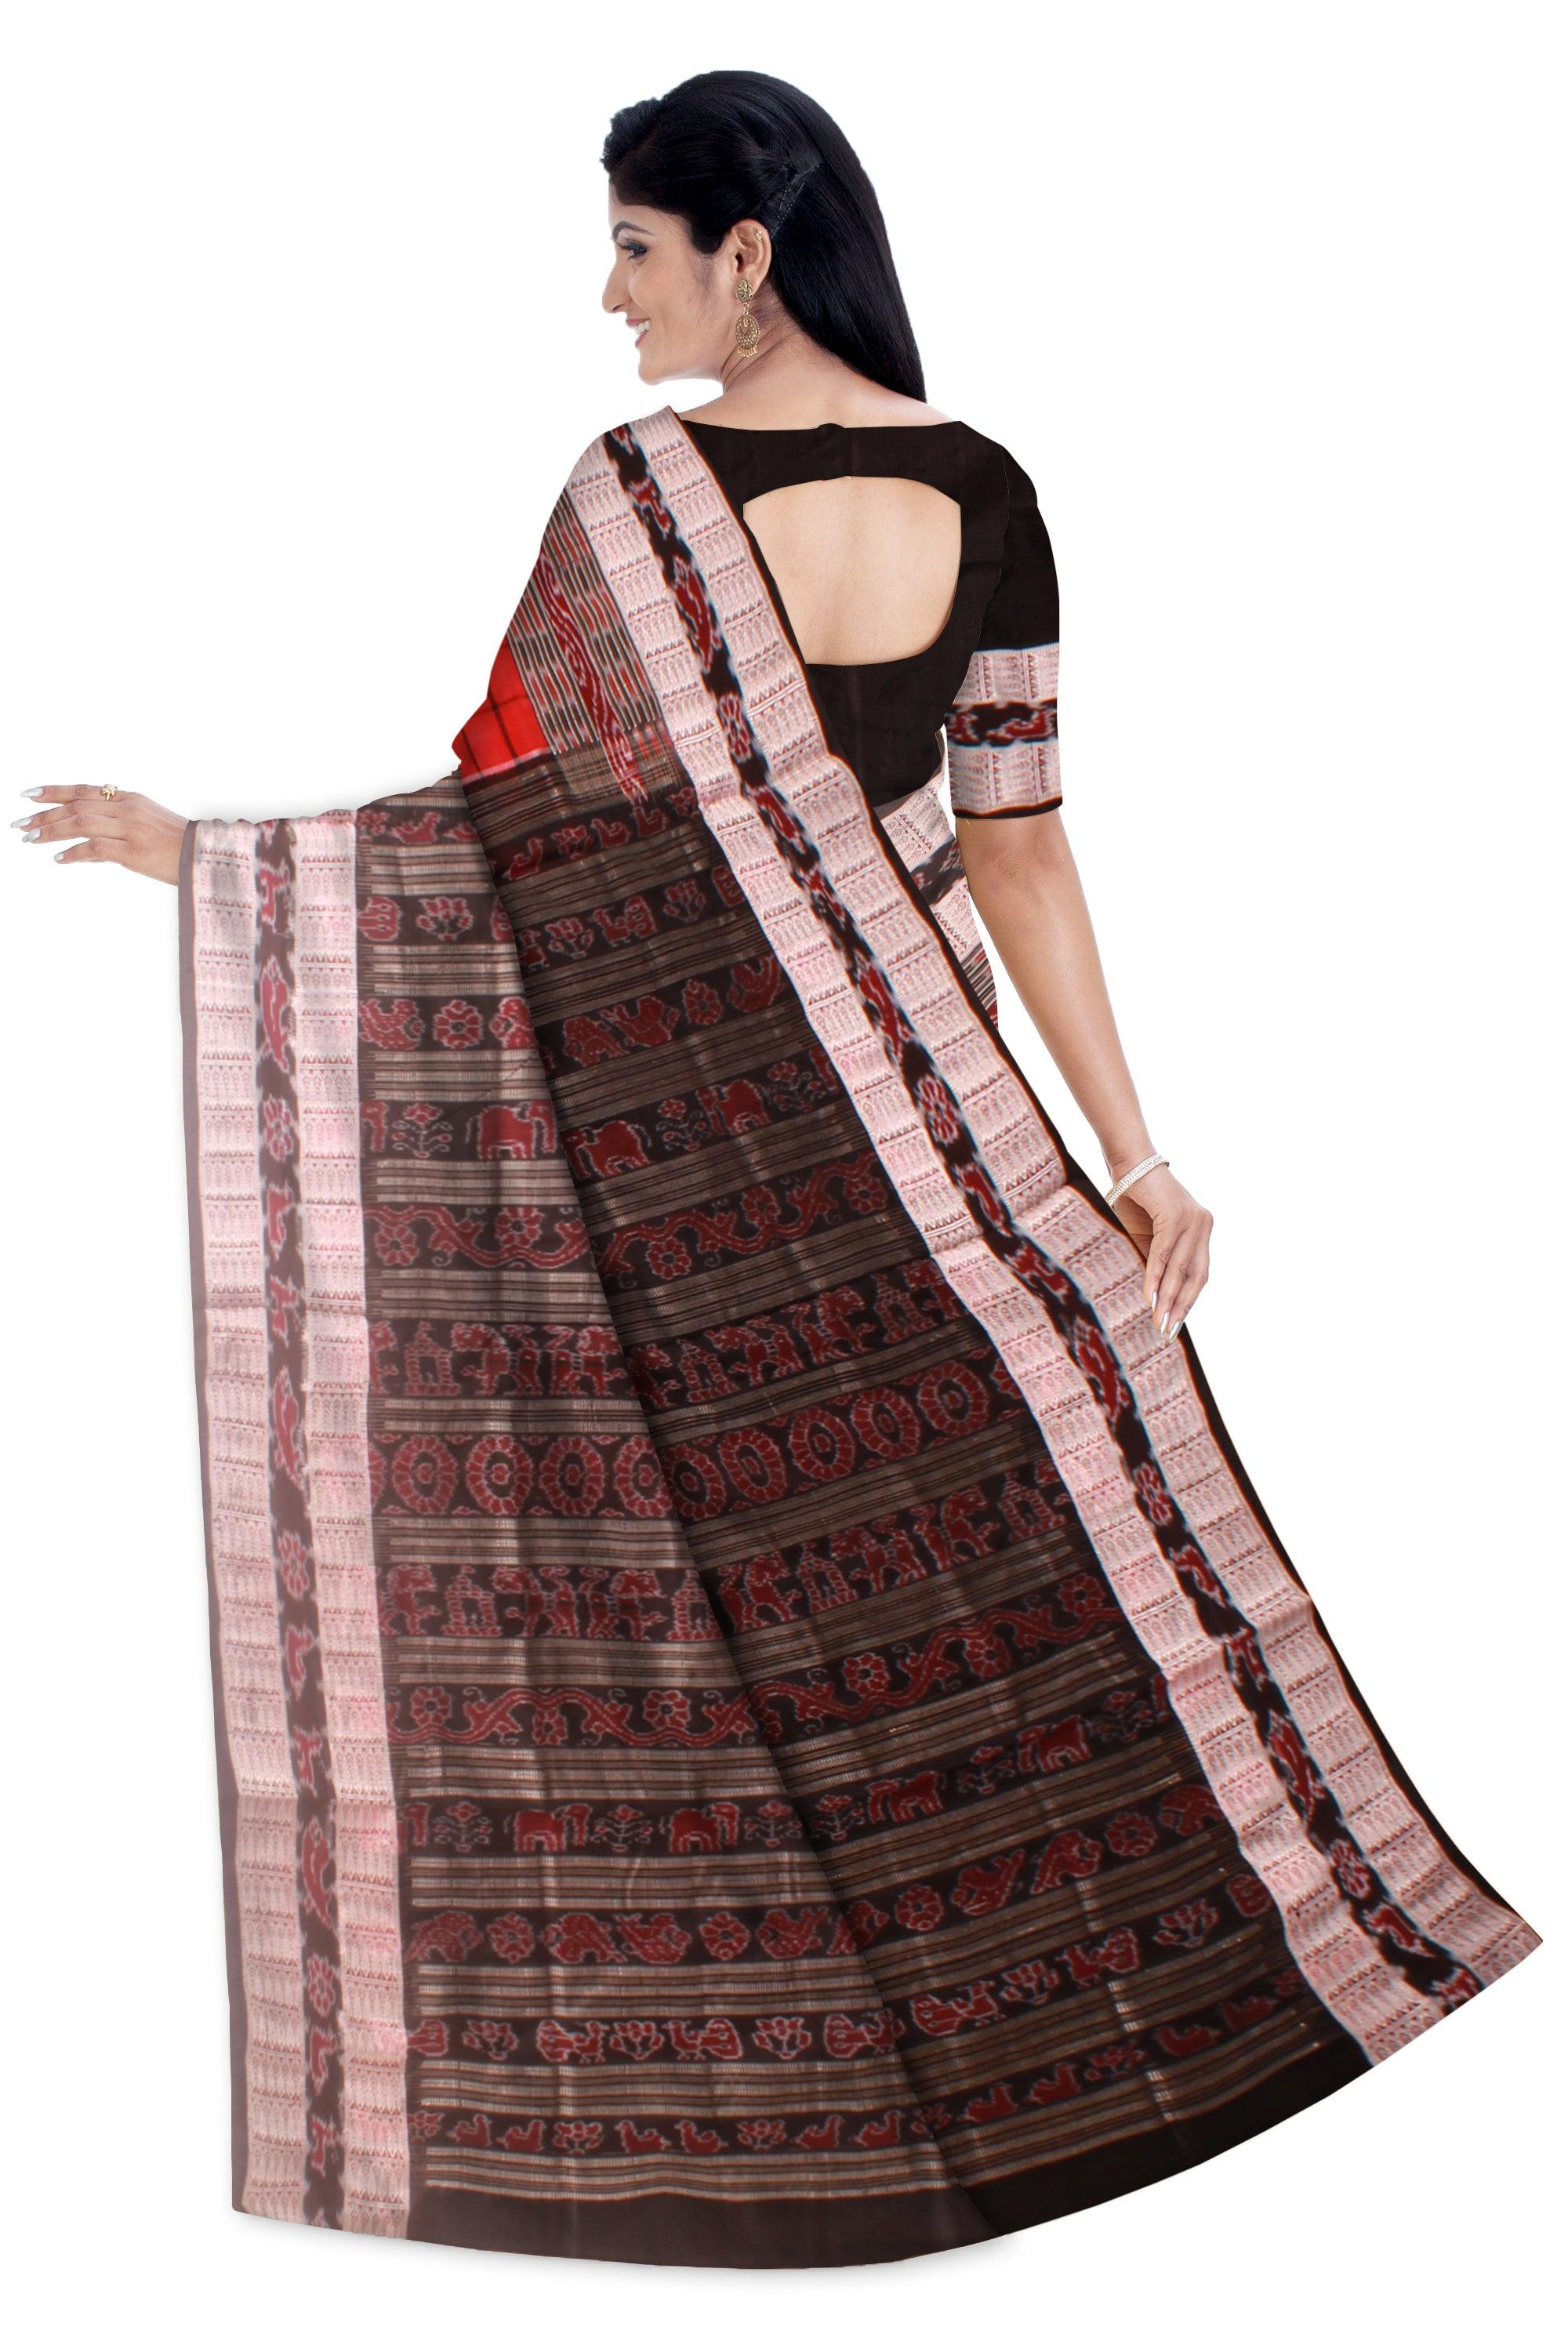 Sambalpuri Original silk Saree in Bichitrapuri Design with blouse piece. - Koshali Arts & Crafts Enterprise